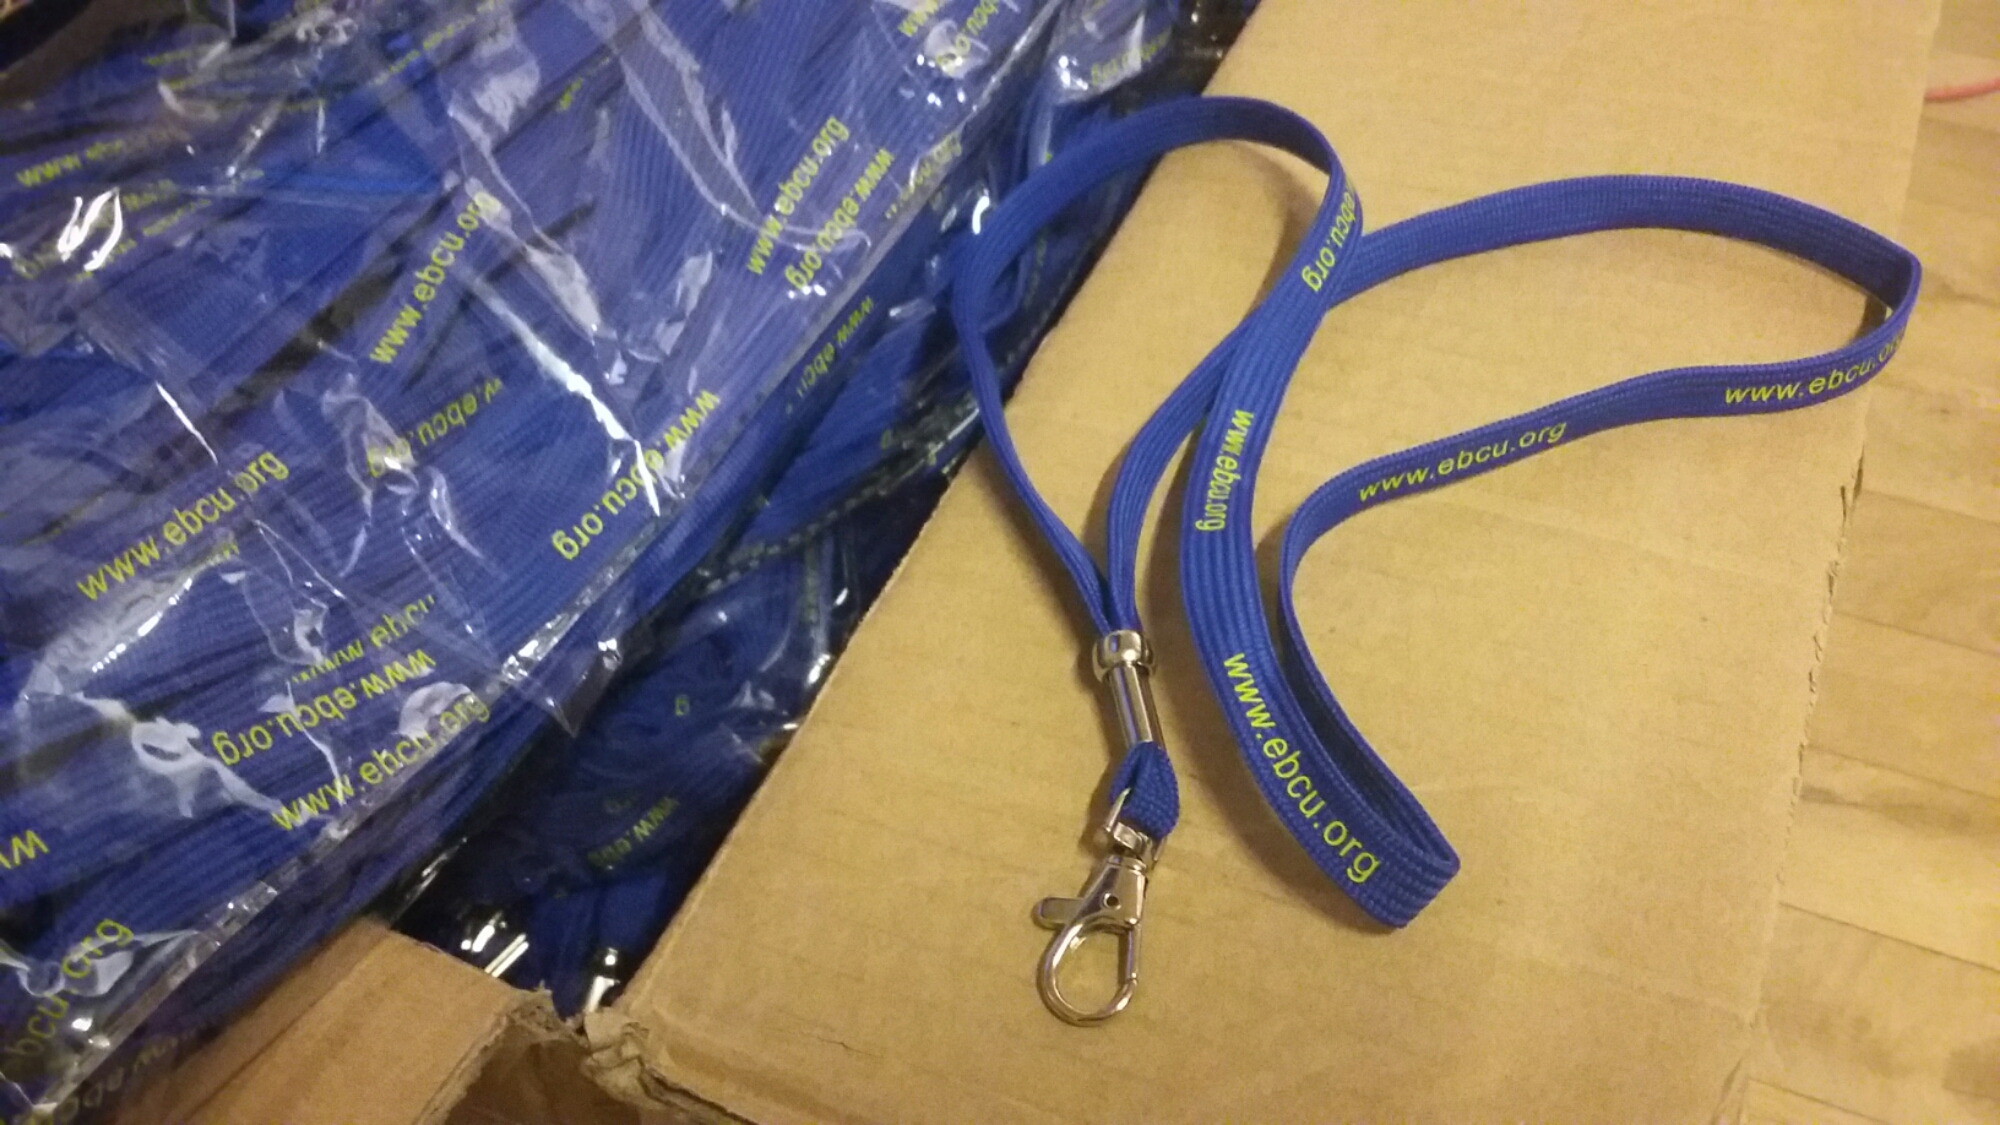 New key hangers arrived